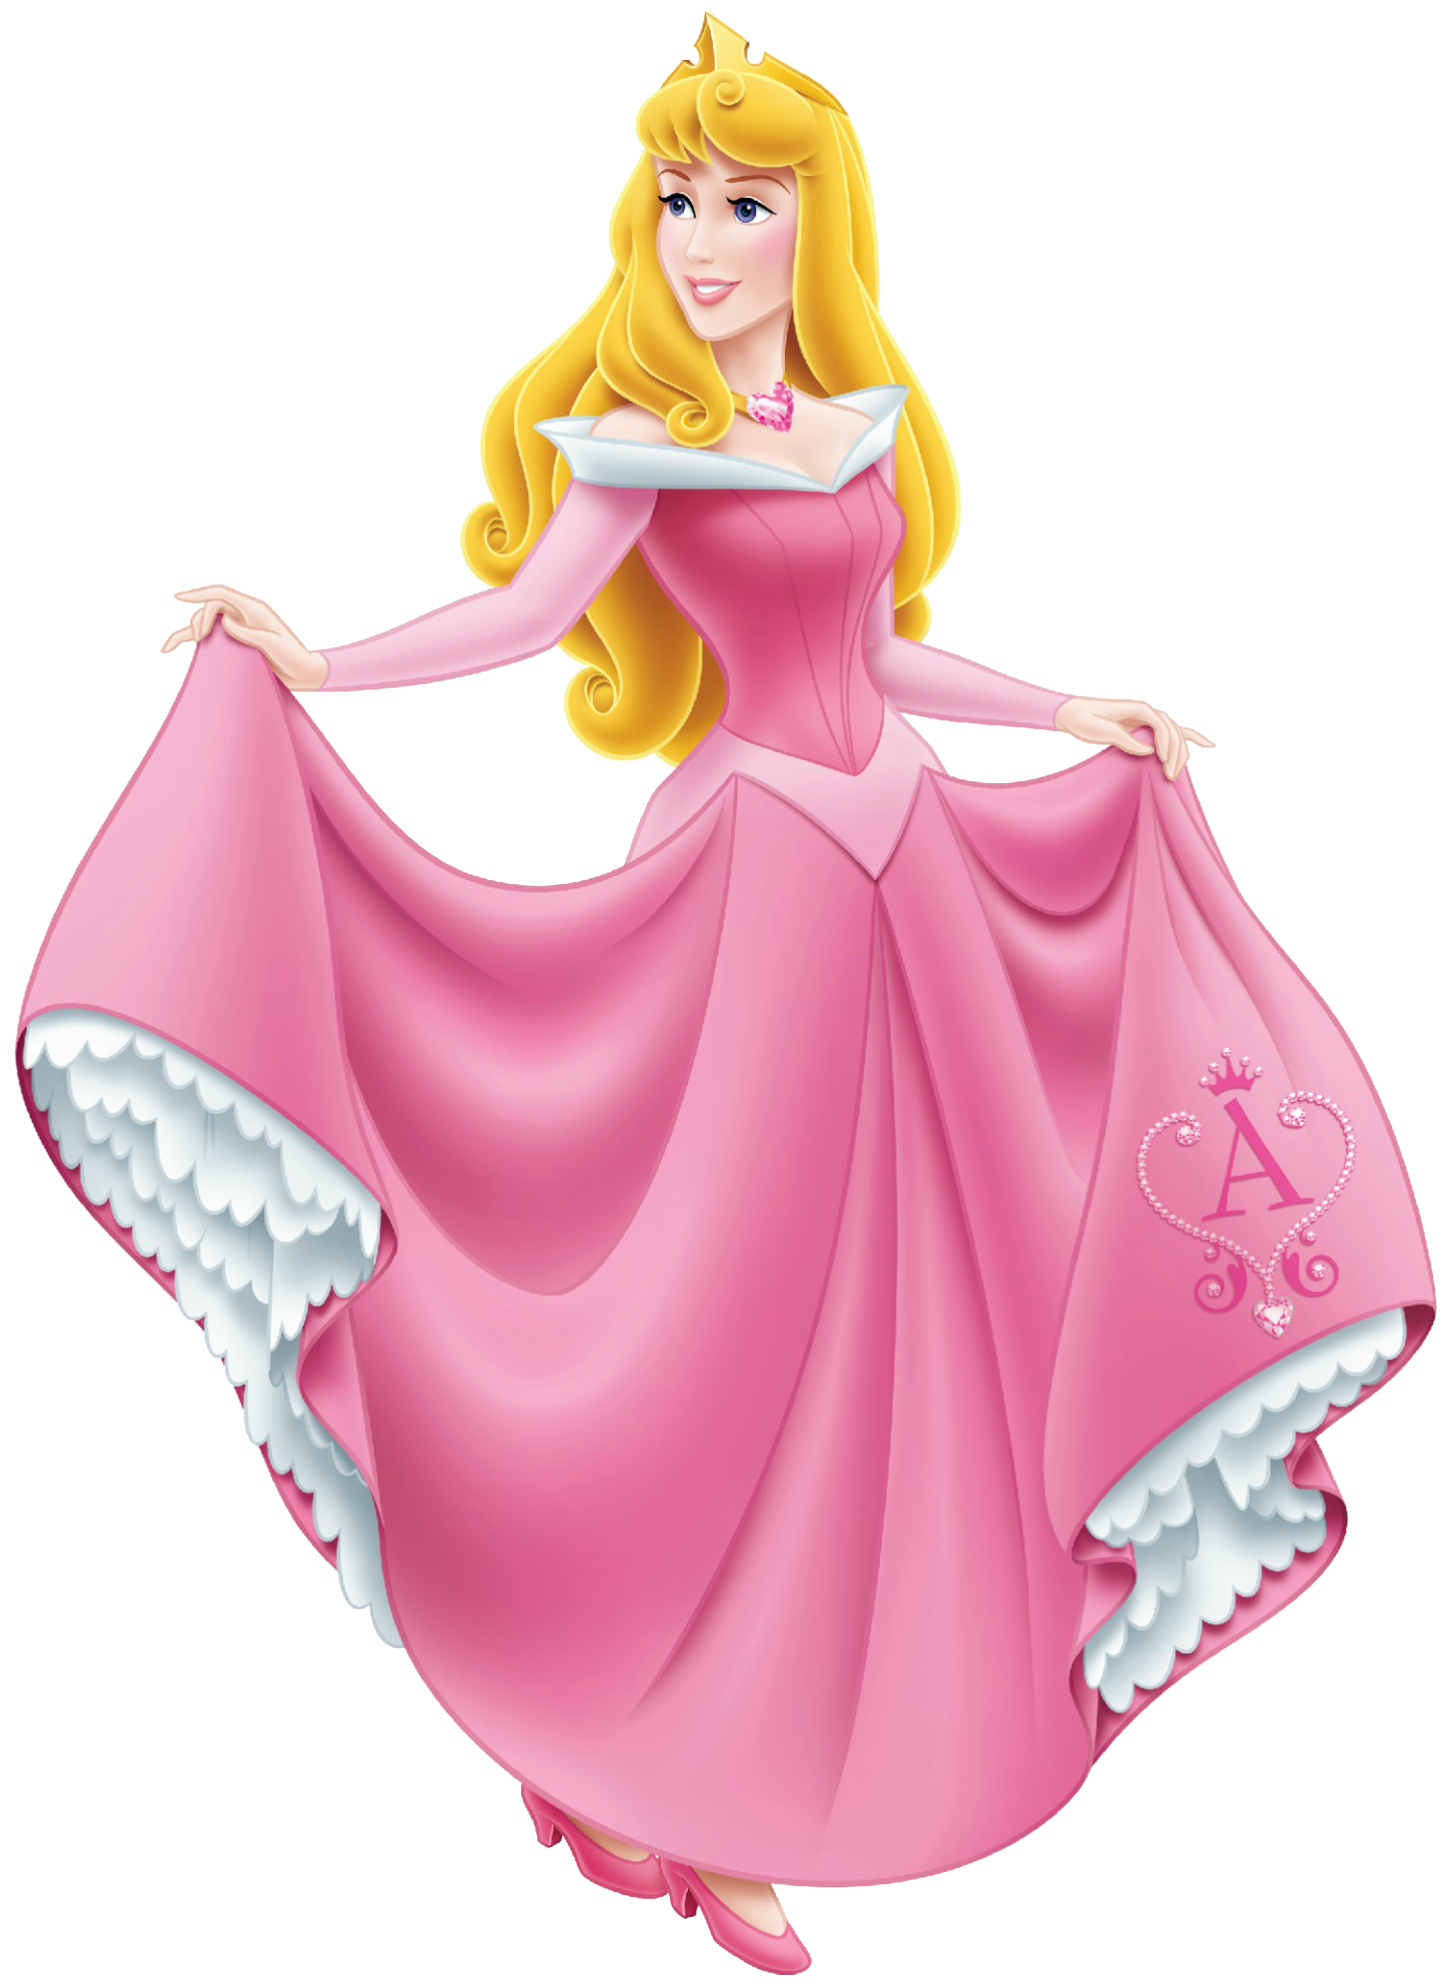 Download Princess Aurora Transparent Background Hq Png Image Freepngimg